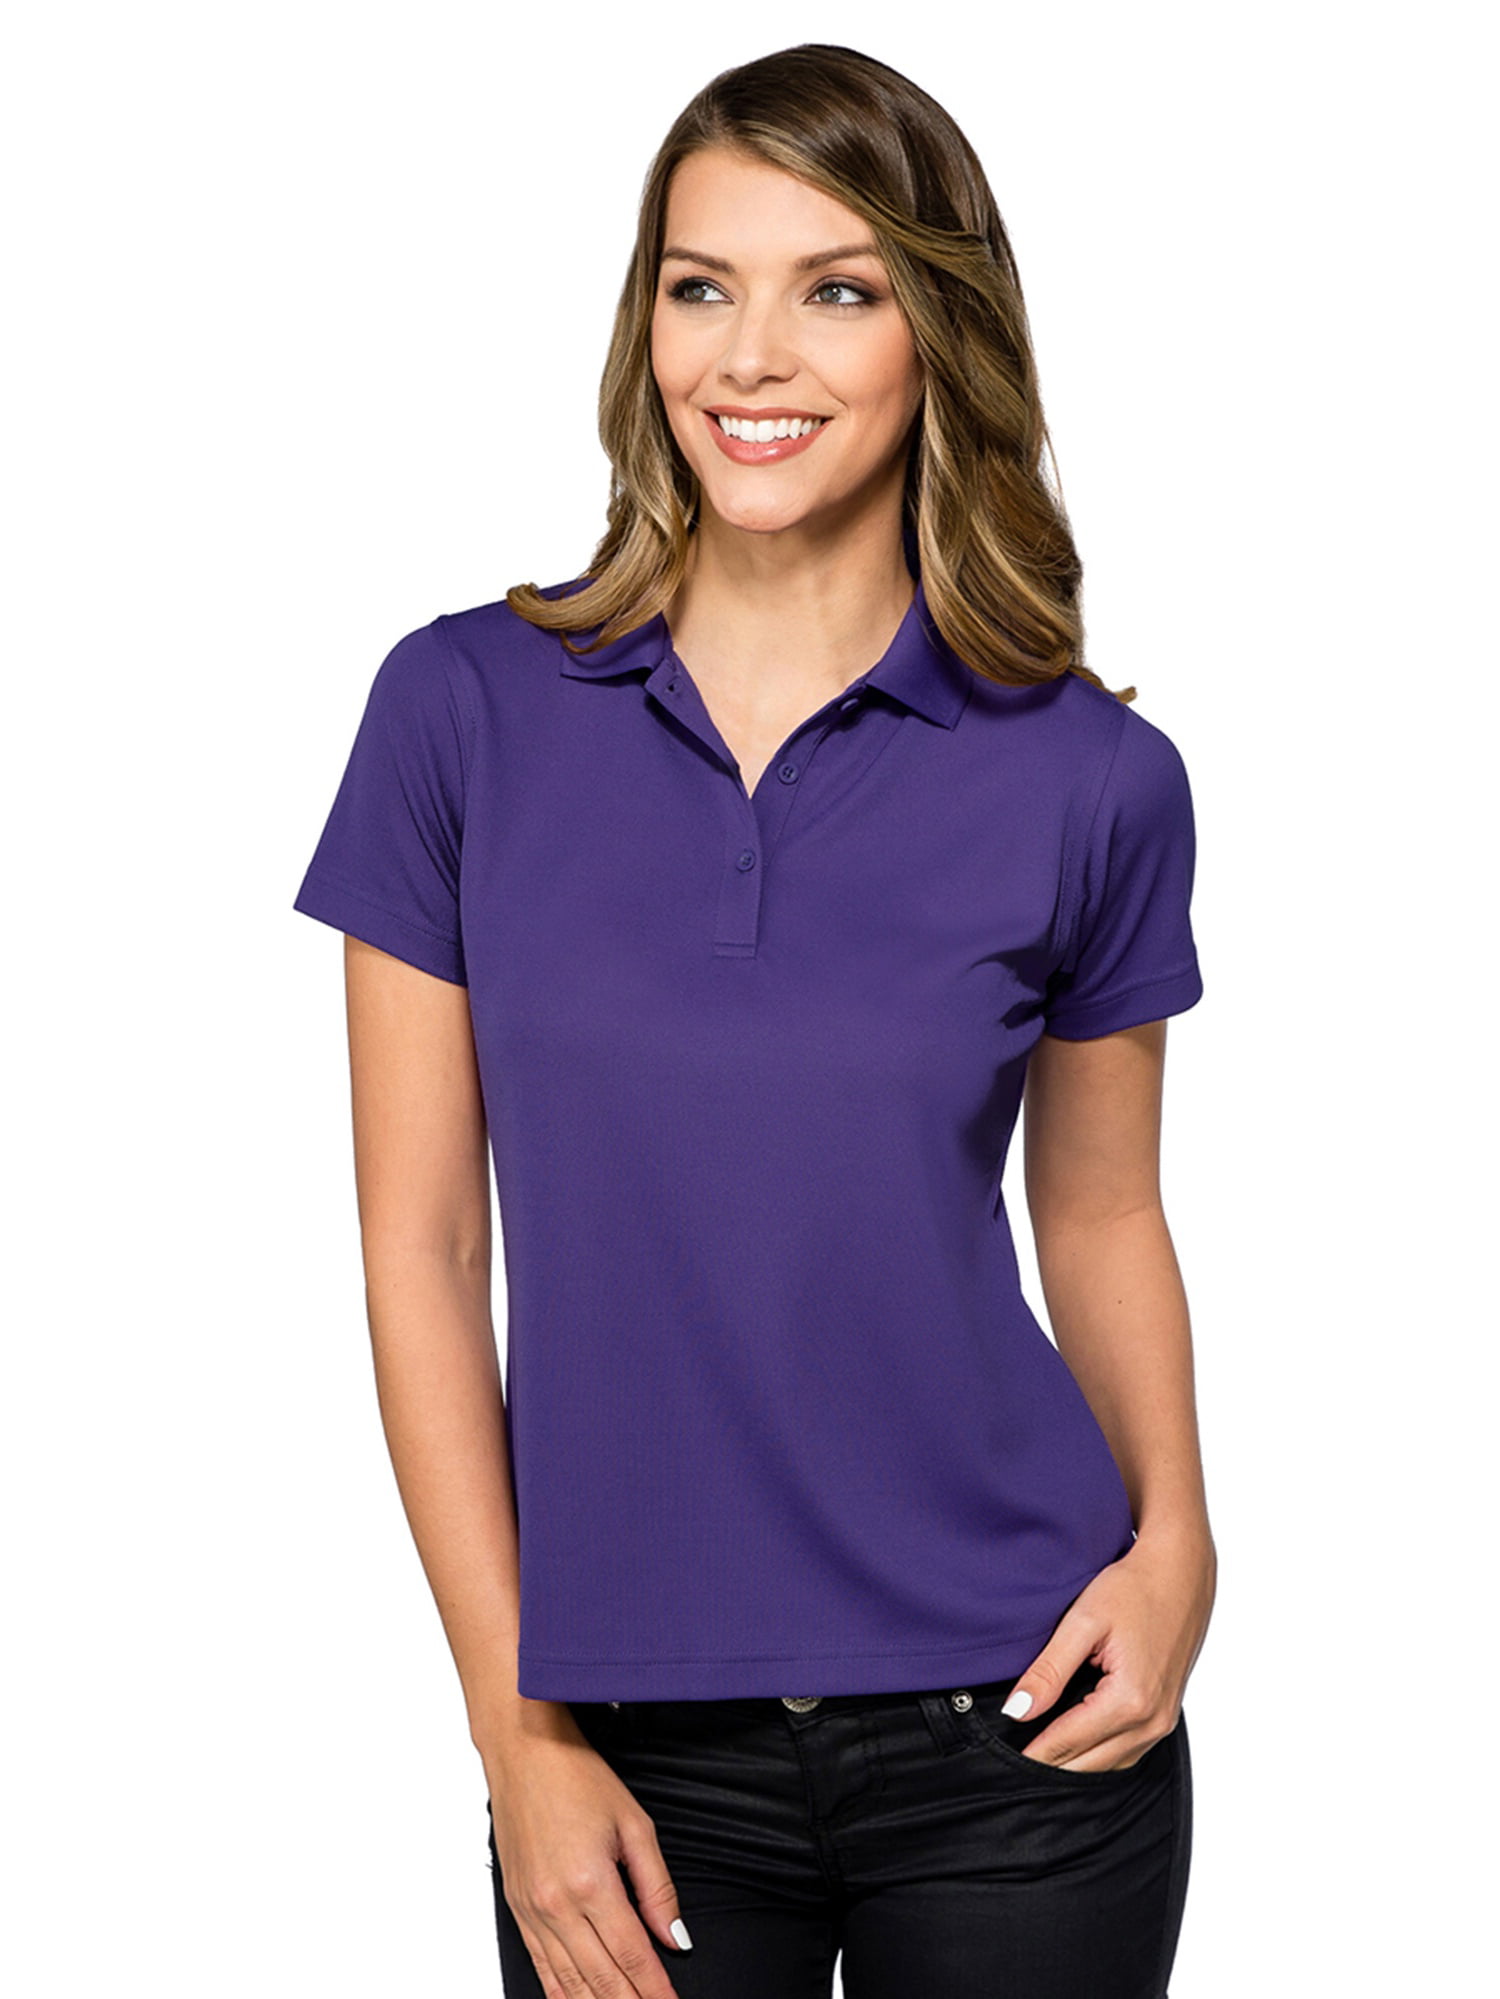 Tri-Mountain Women's Rib Collar Pique Polo Shirt - Walmart.com